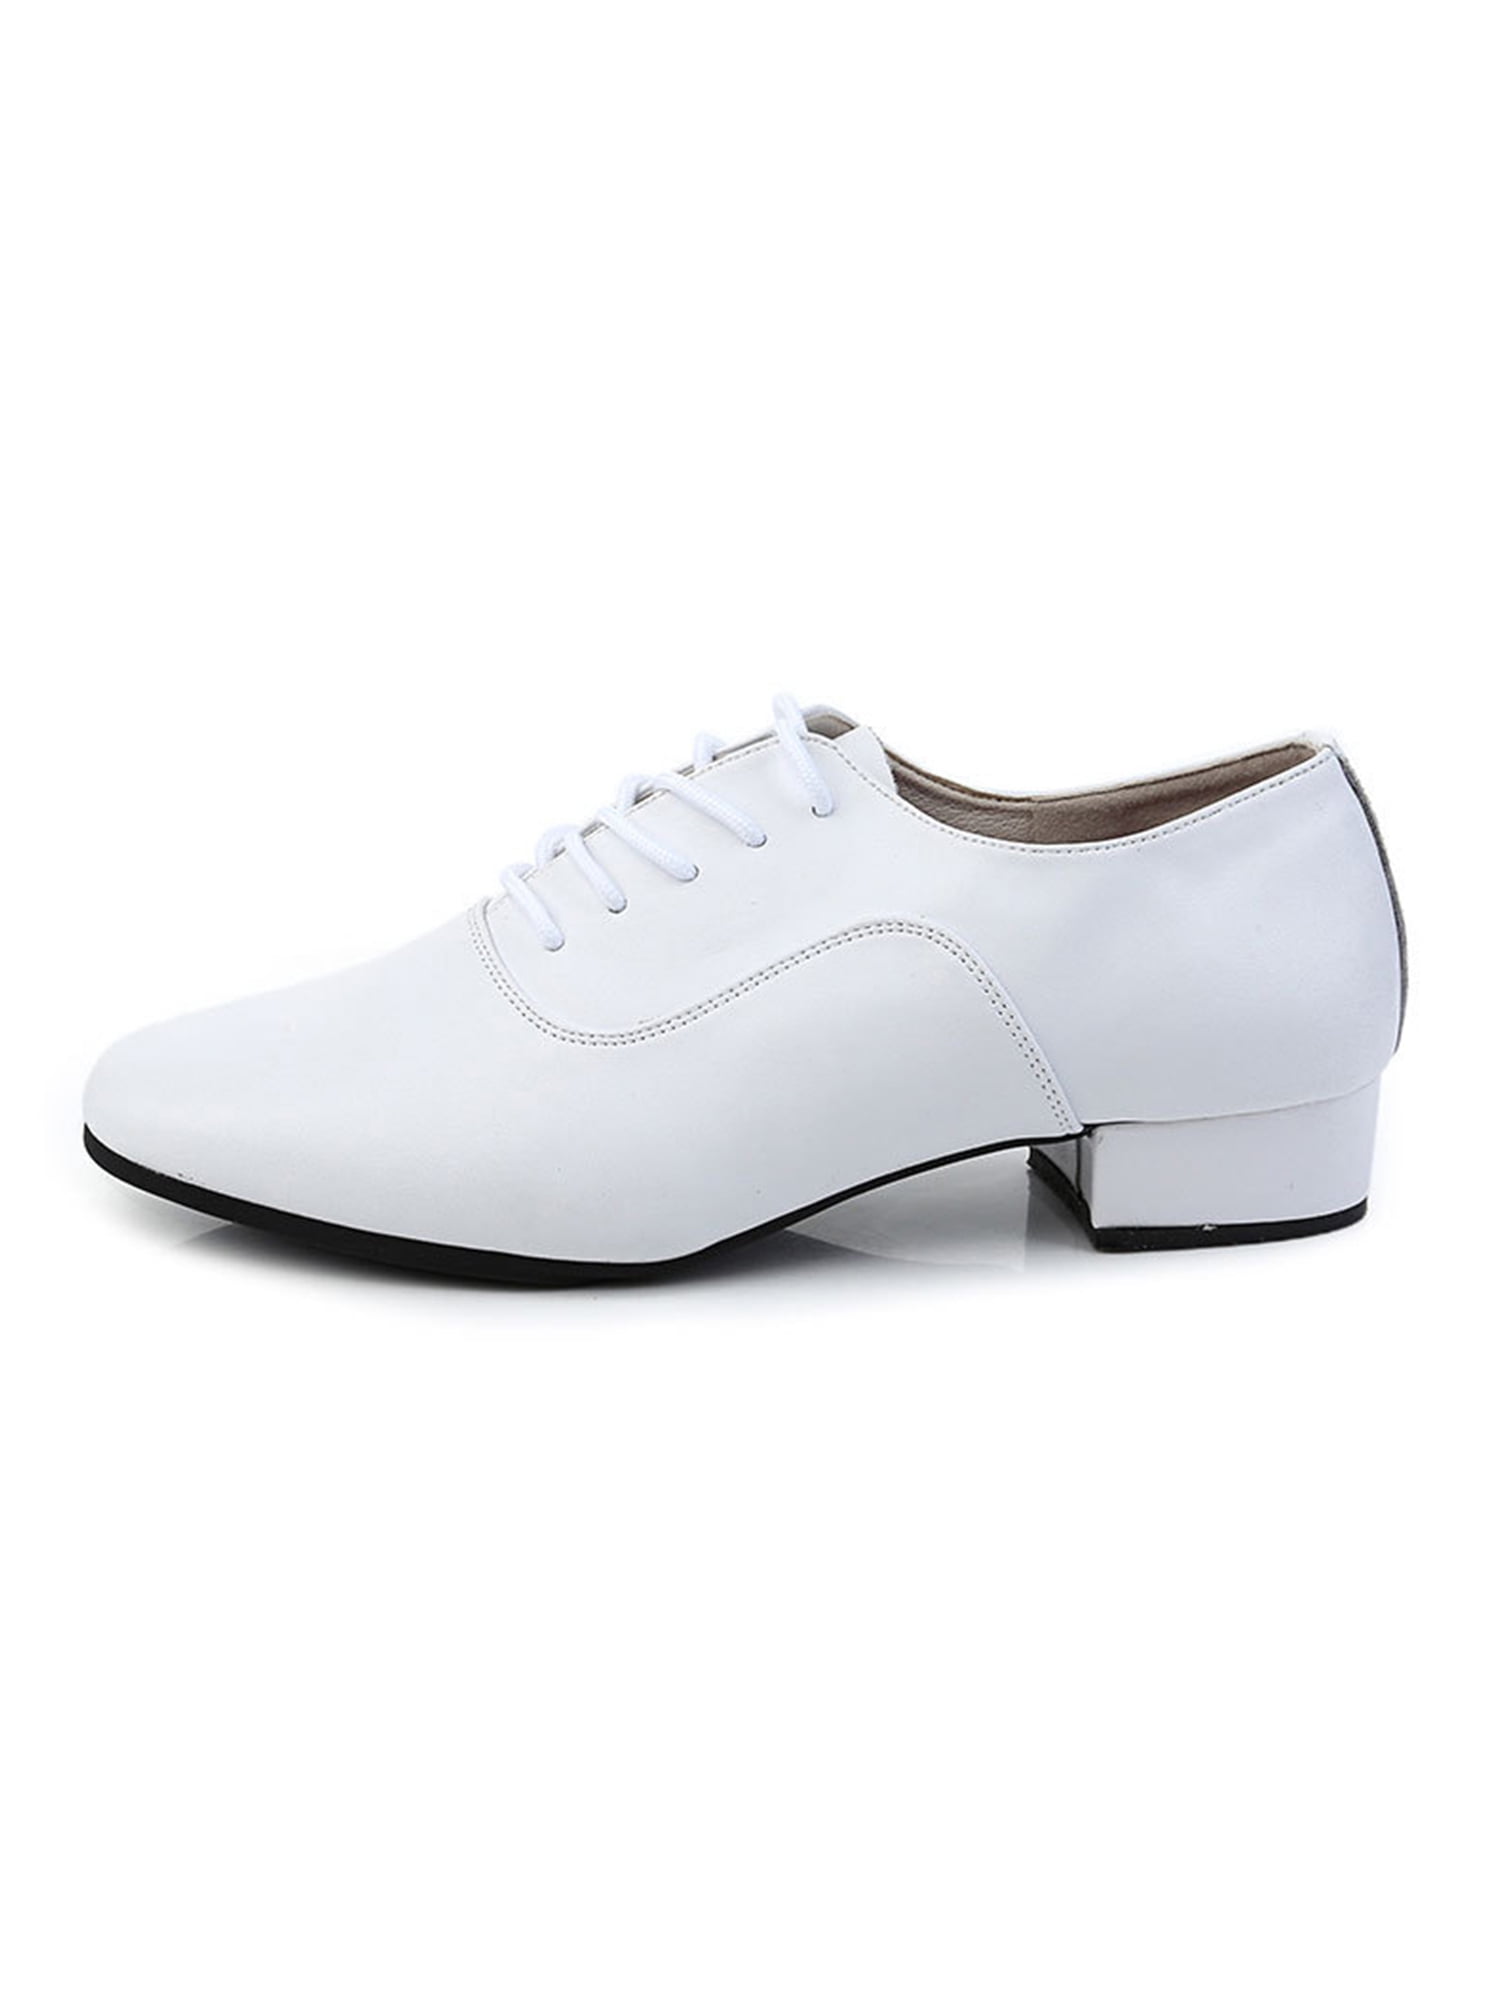 Rockomi Mens Comfort Ballroom Shoes Dancing Practice Lightweight Salsa Wide Width Dance Shoes White (rubber sole) 6.5 - Walmart.com